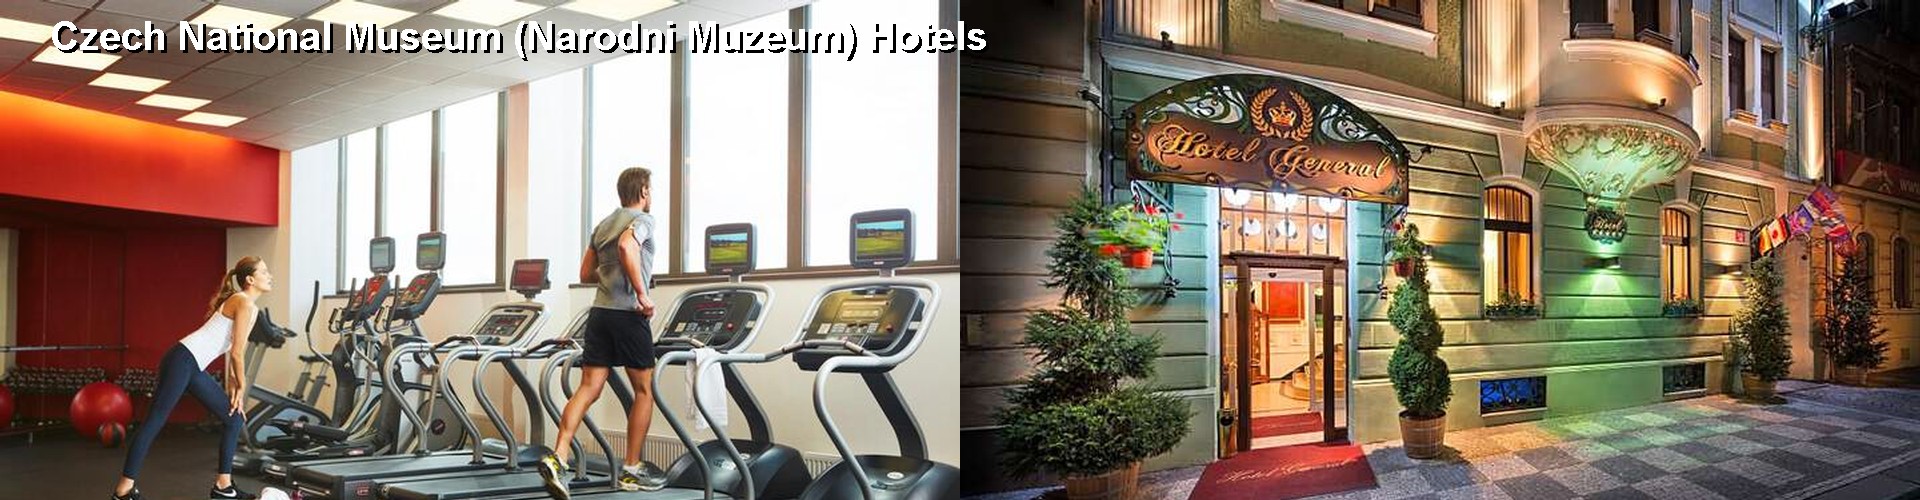 5 Best Hotels near Czech National Museum (Narodni Muzeum)